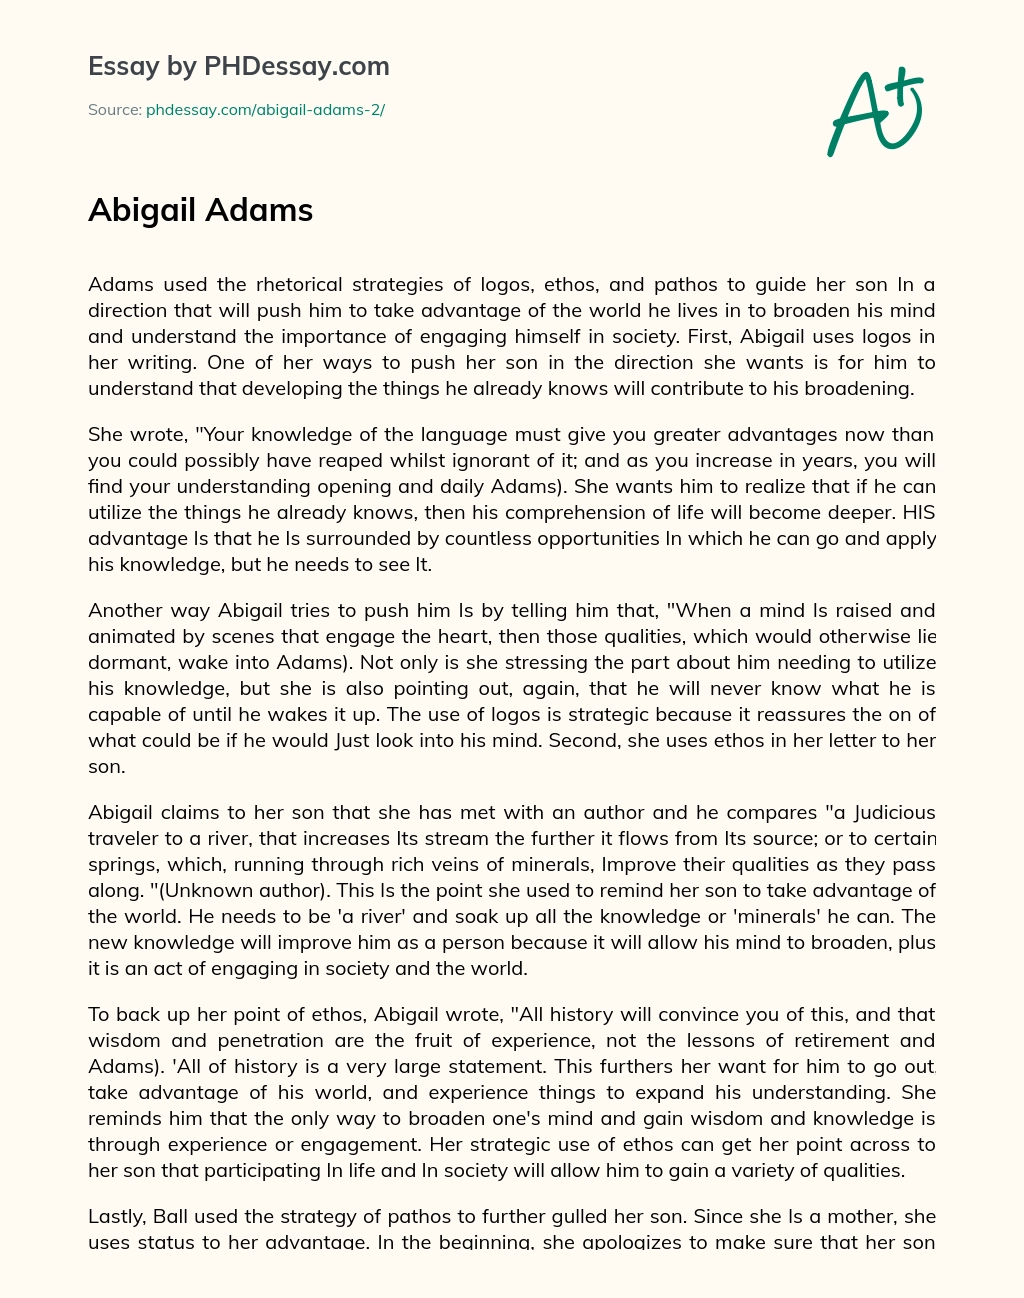 Abigail Adams essay